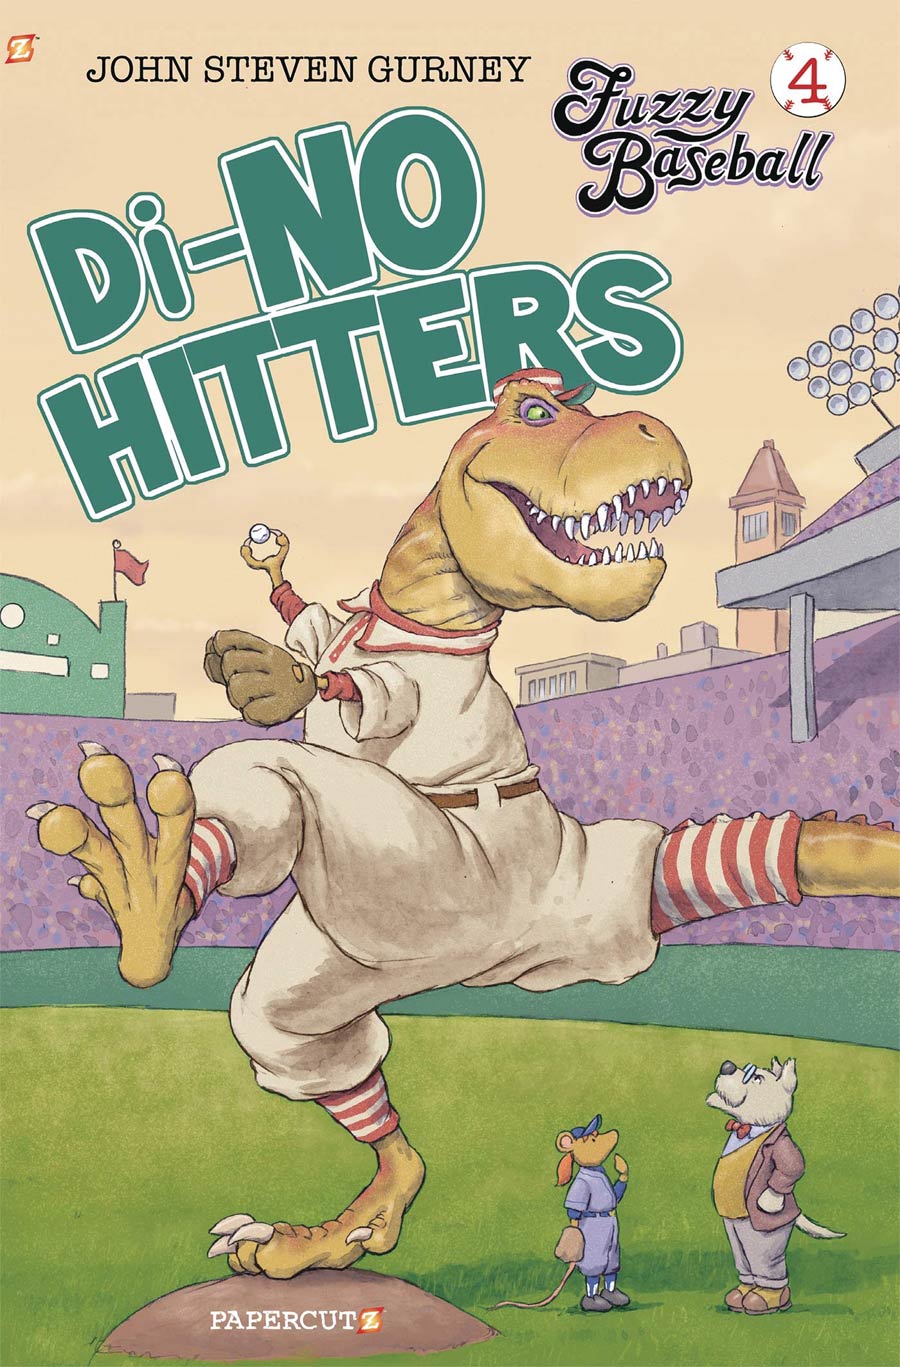 Fuzzy Baseball Vol 4 Di-No Hitters TP